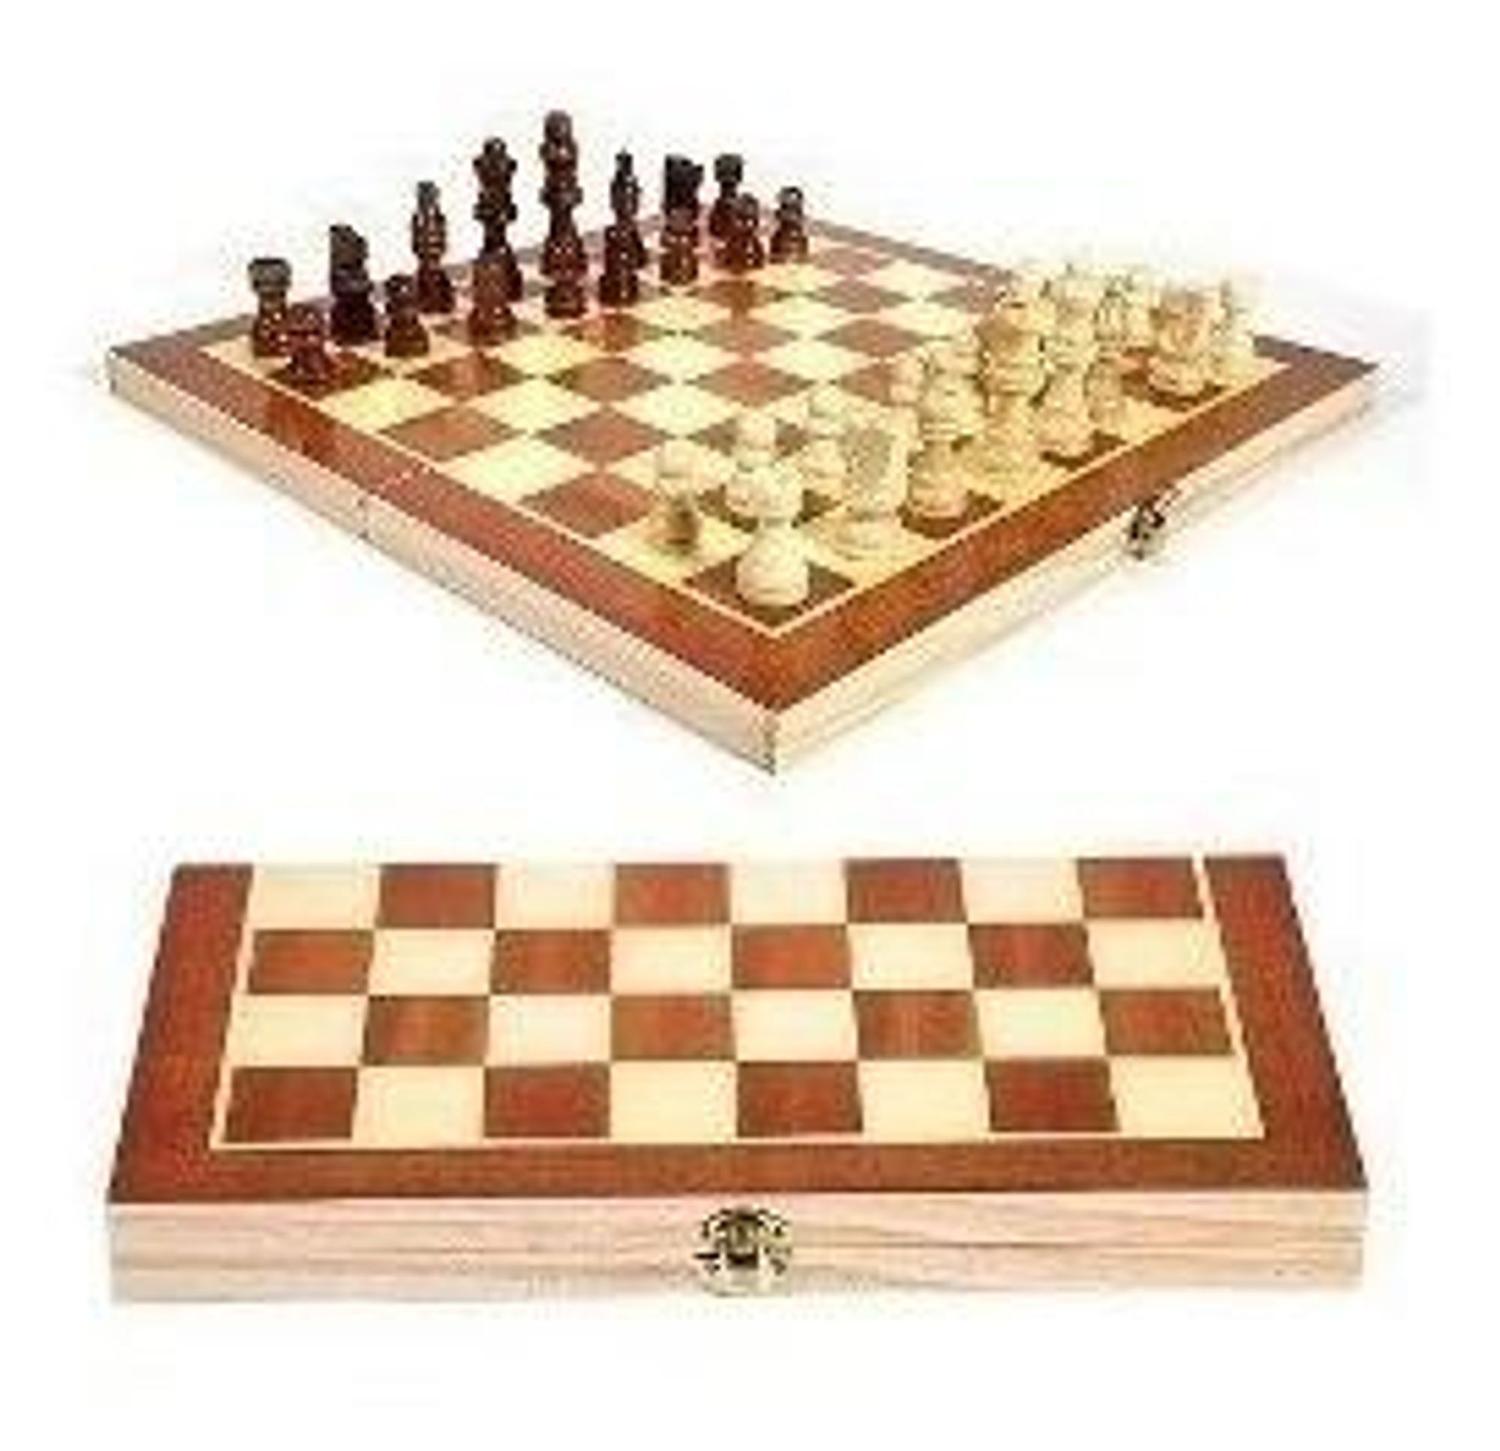 Conjunto de xadrez de madeira, 38 x 38 cm, grande jogo de xadrez